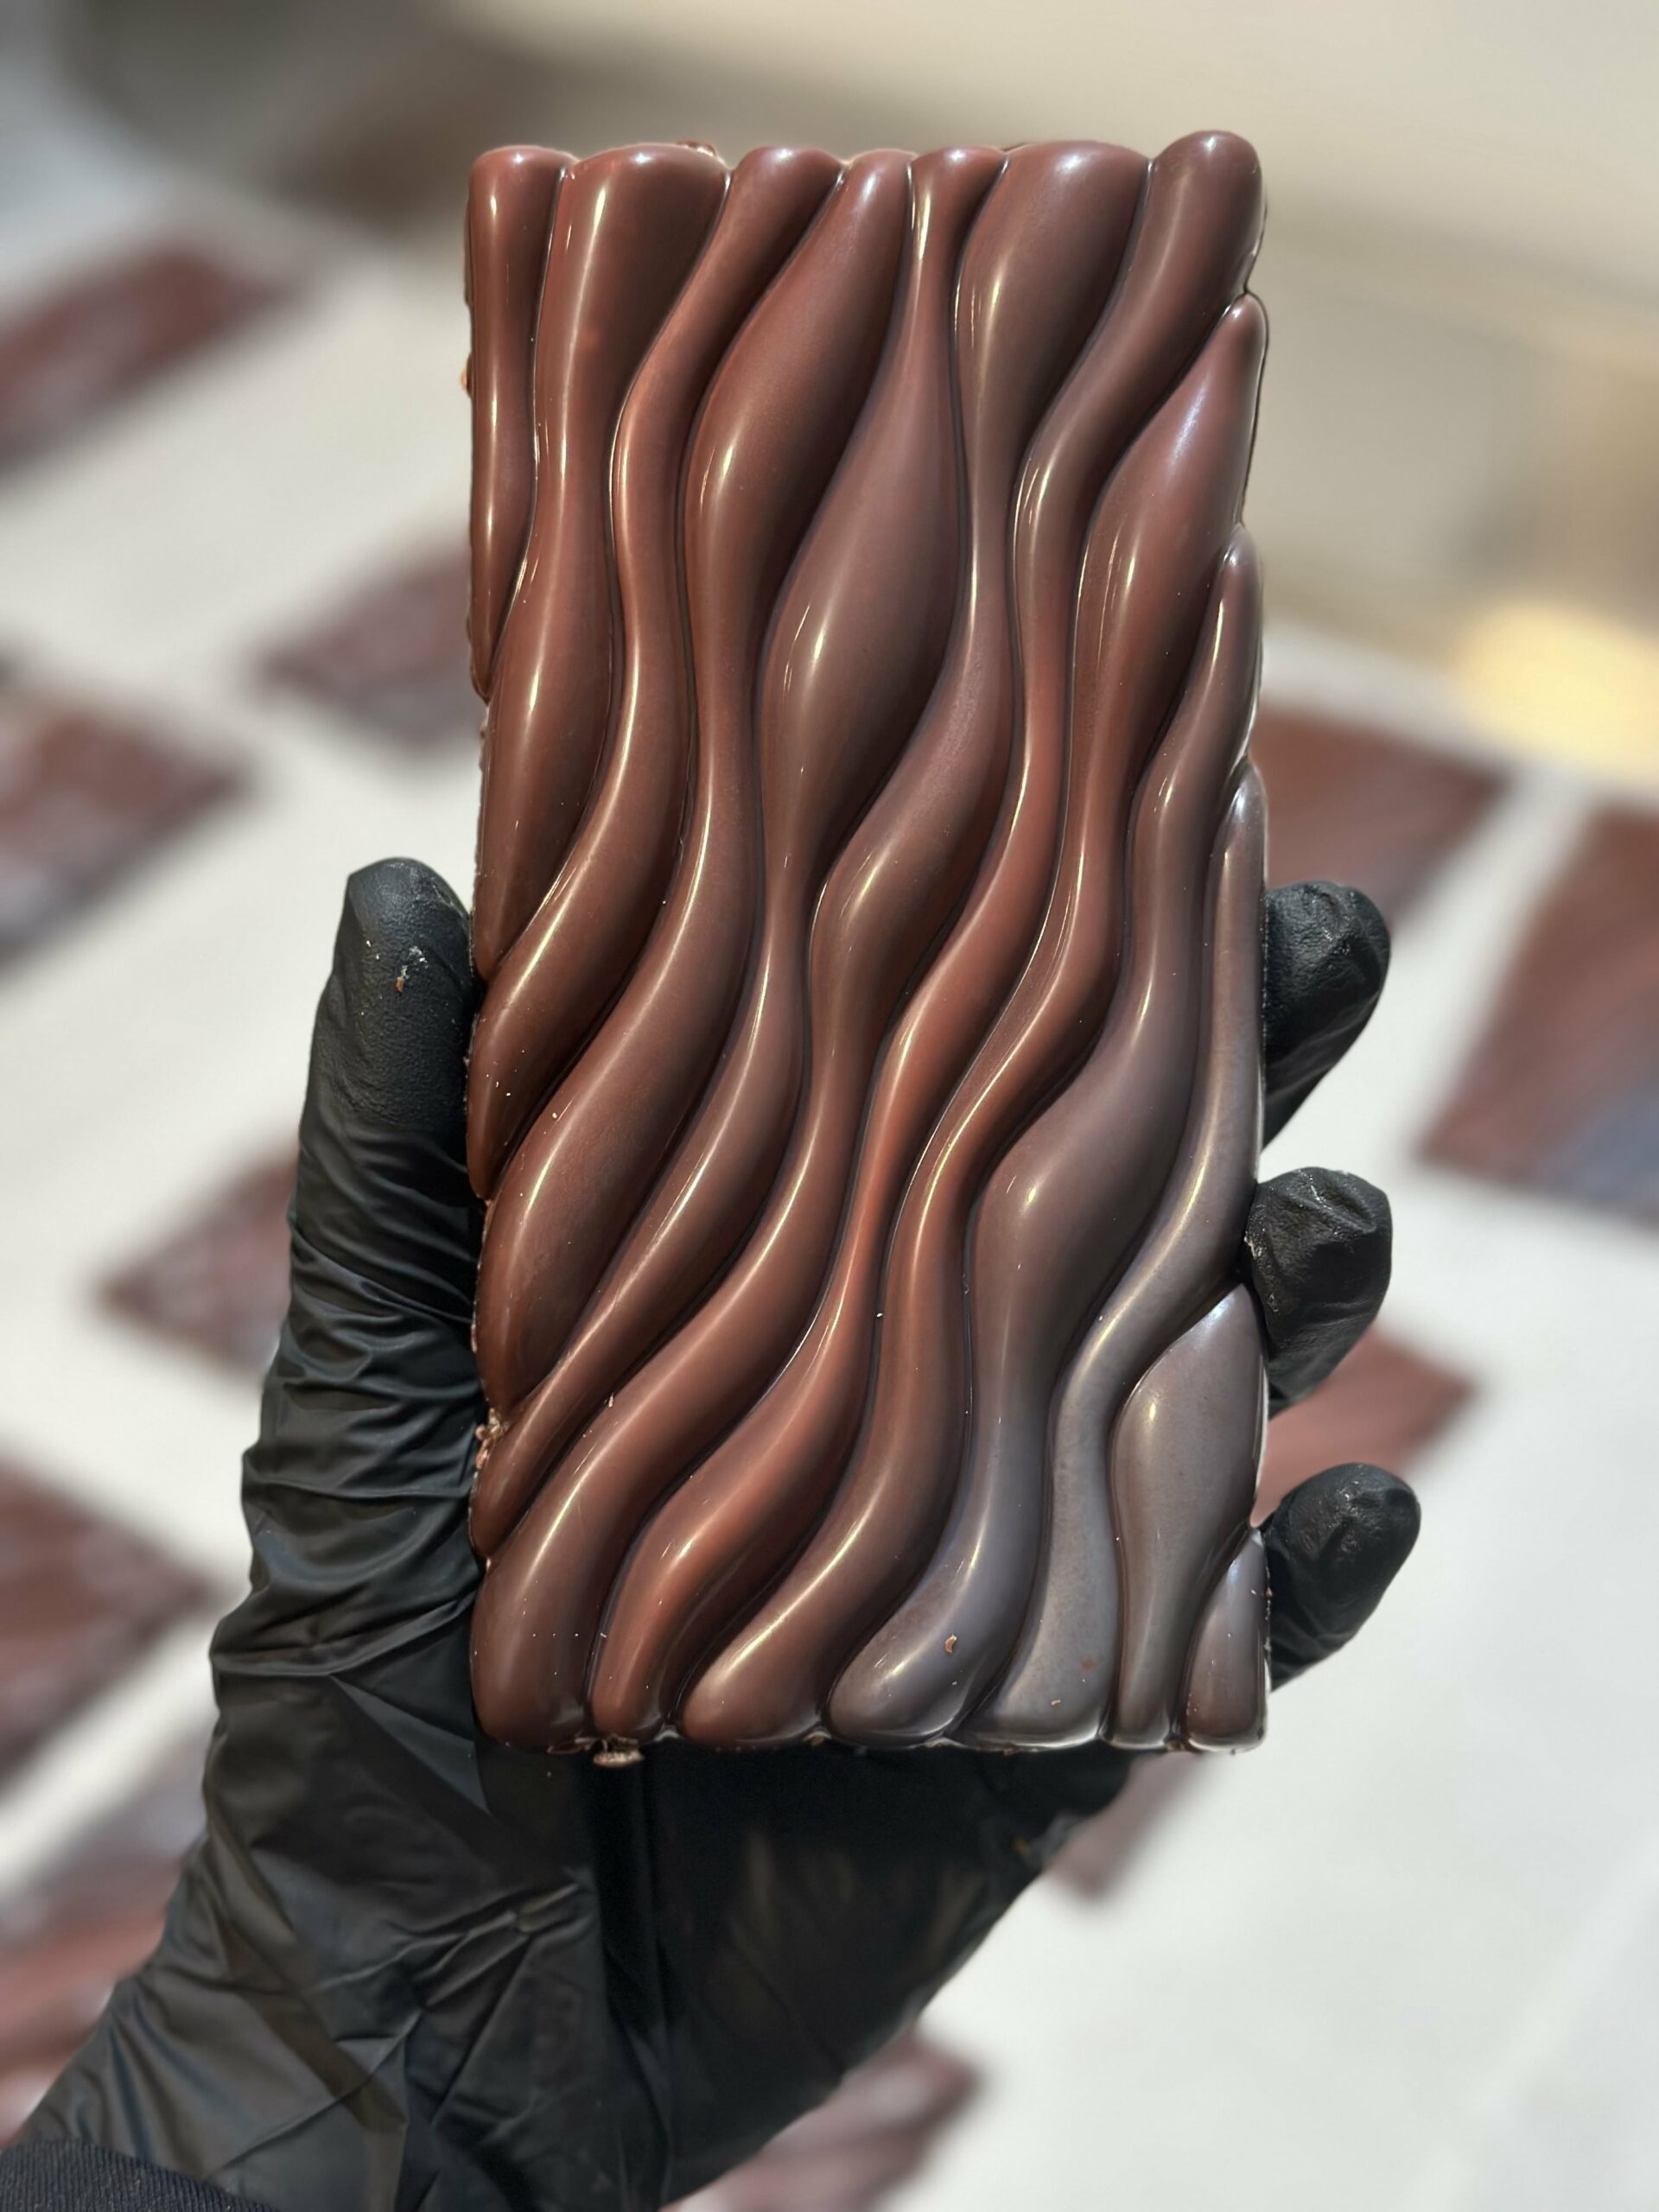 Tablette Guimauve chocolaterie Beaune